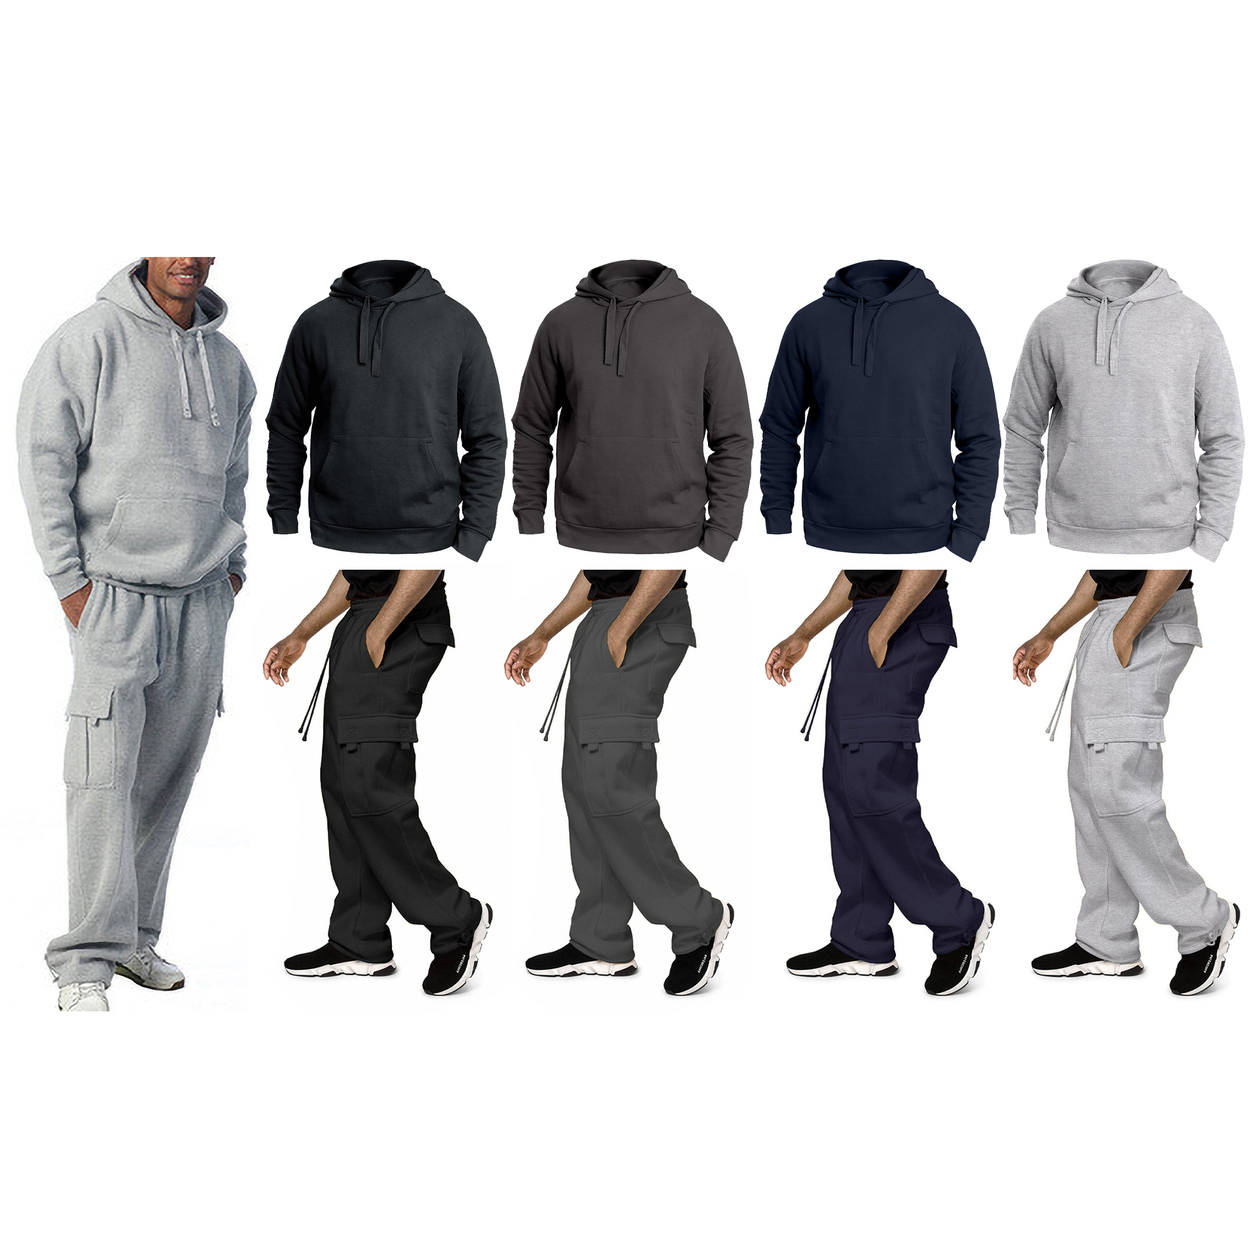 2-Pack: Men's Big & Tall Winter Warm Cozy Athletic Fleece Lined Multi-Pocket Cargo Sweatsuit - Black, Large